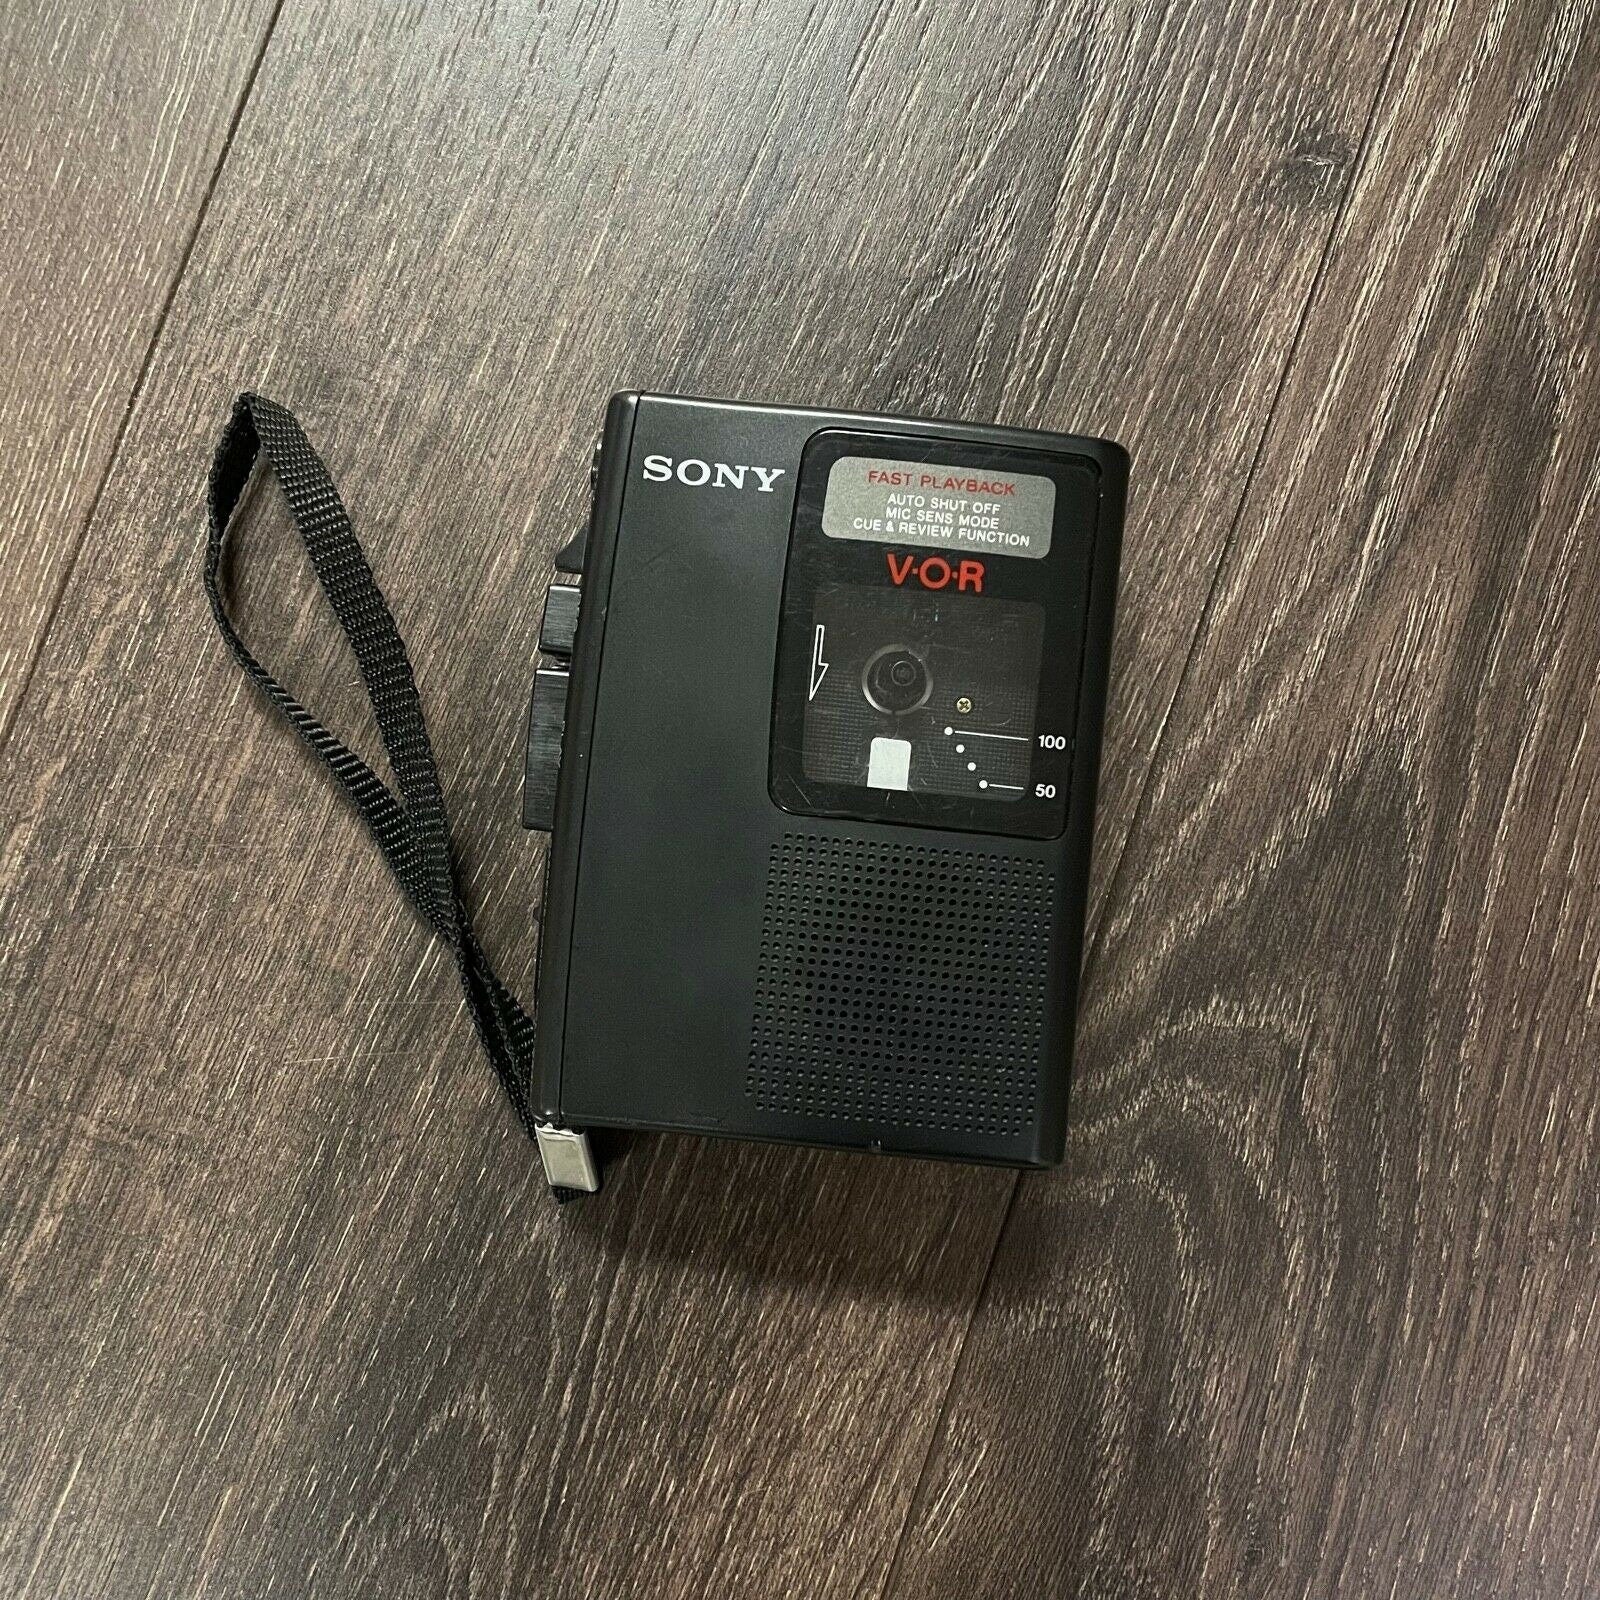 Sony TCM-S64V VOR Cassette Tape Recorder Handheld Voice Operated Walkman